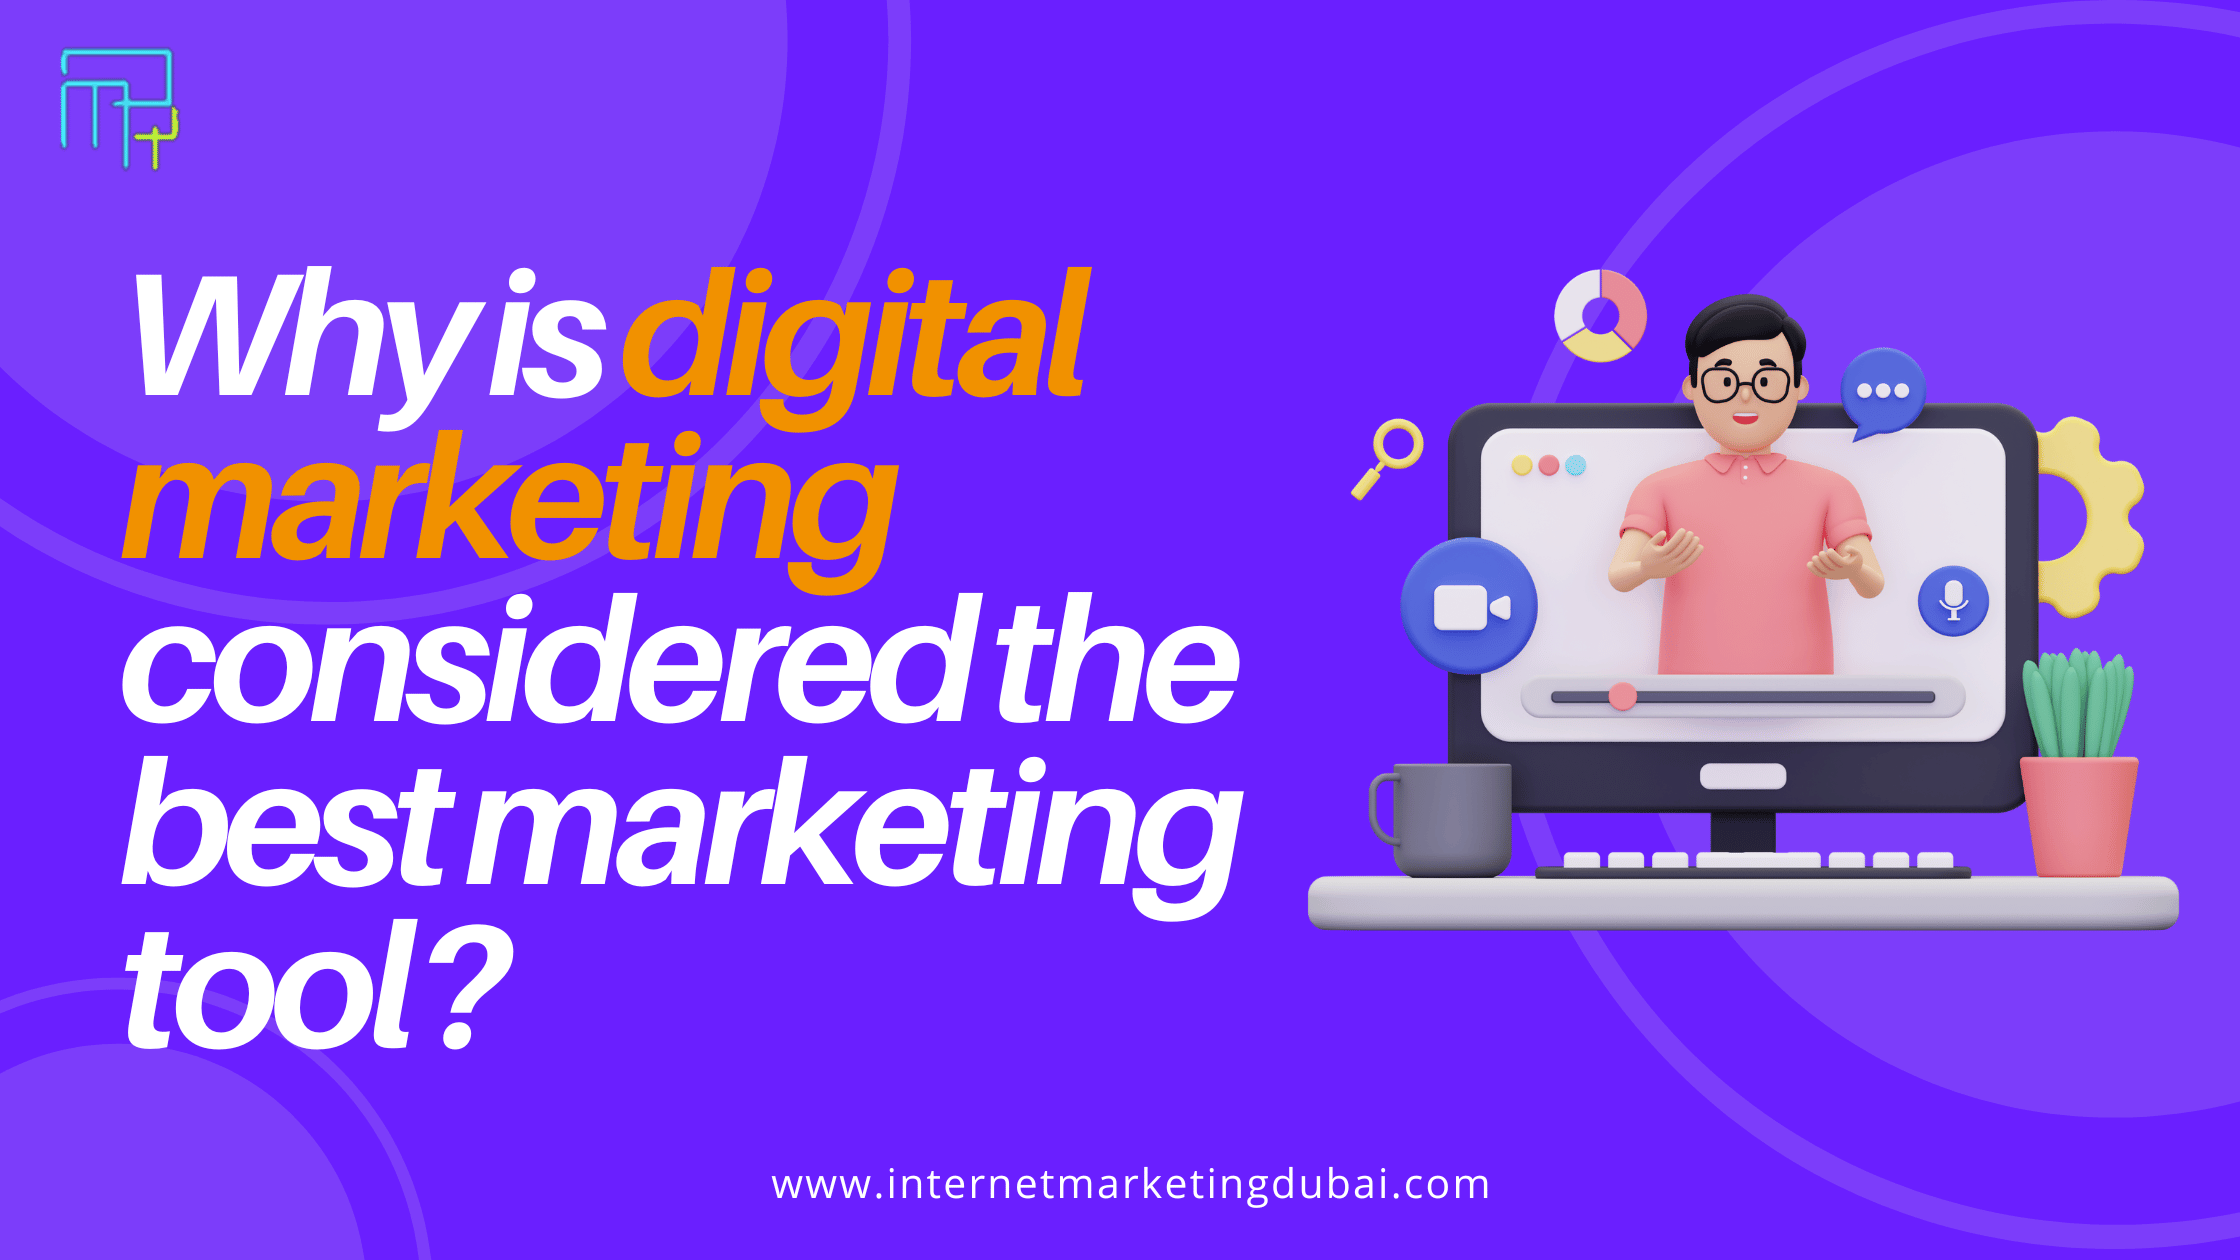 Why is digital marketing considered the best marketing tool? - Internet Marketing - Digital Marketing - SEO Blog in Dubai | UAE